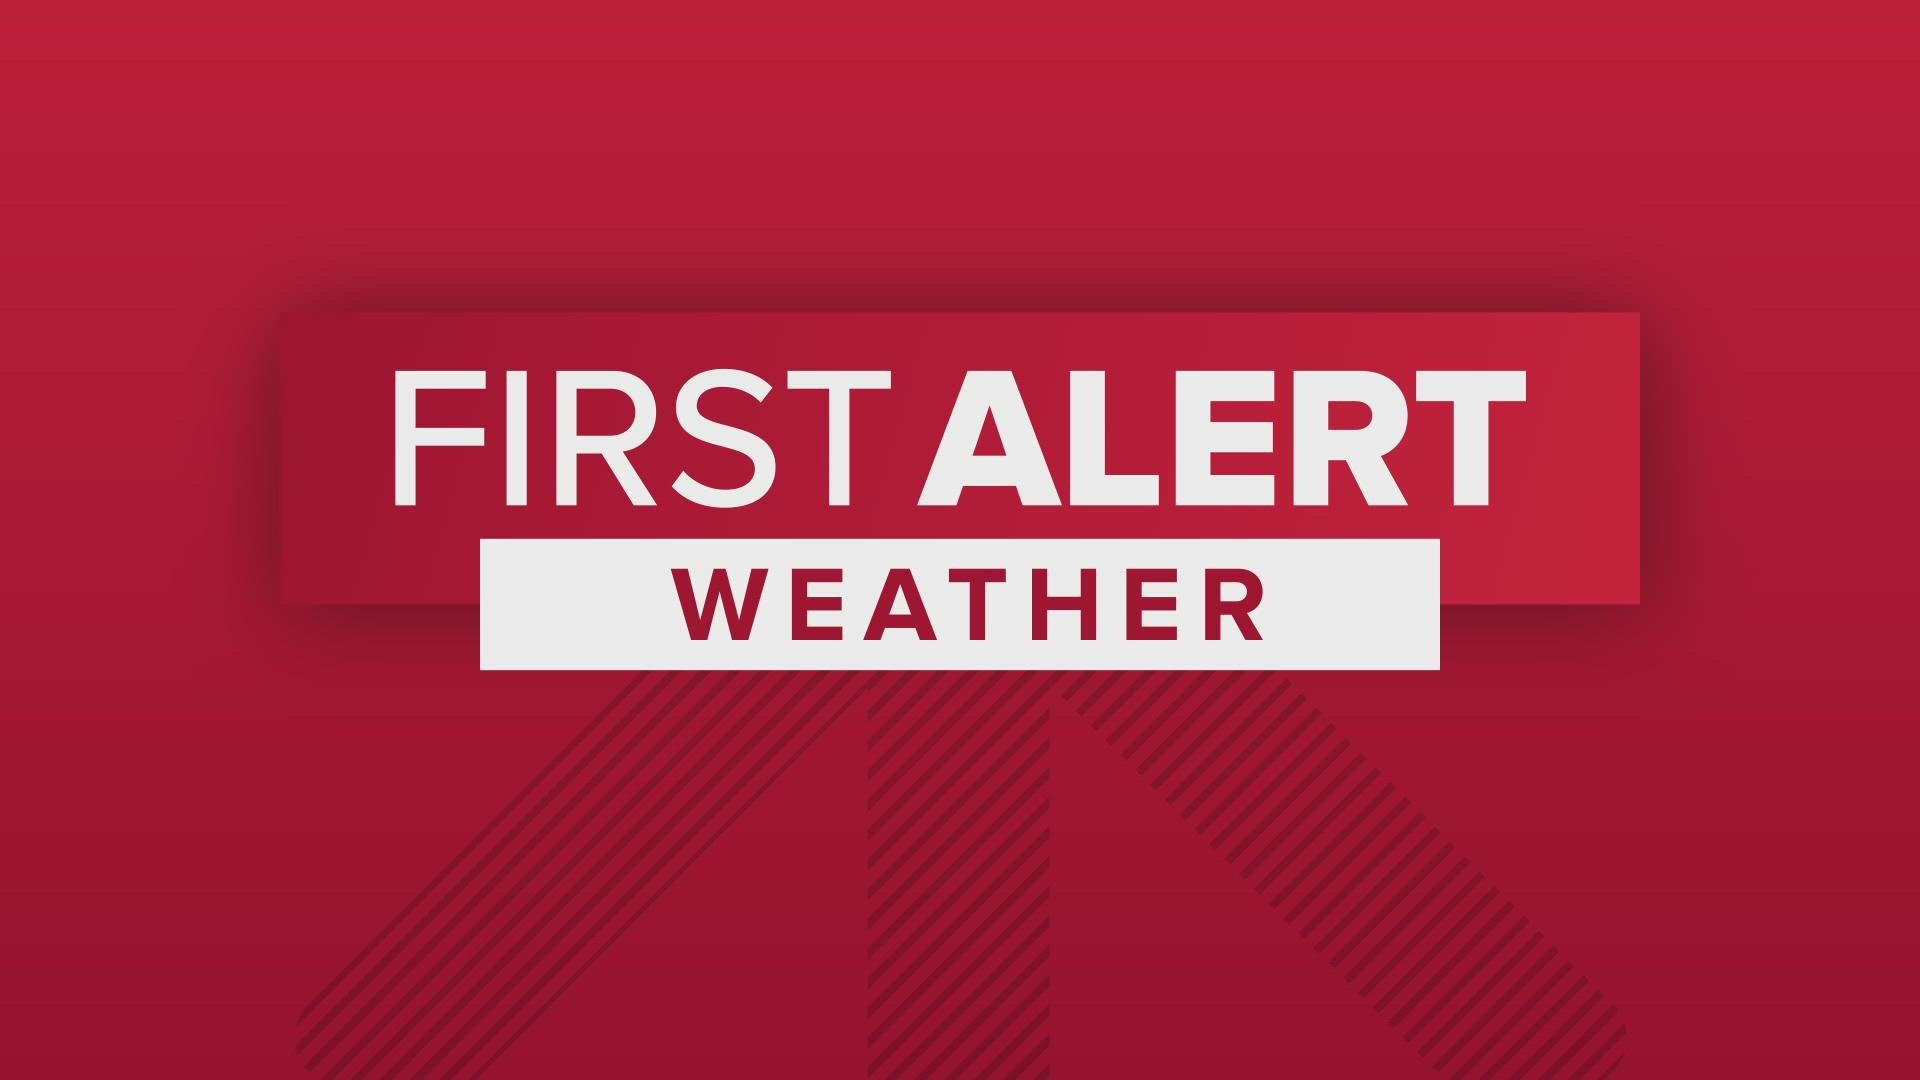 11/29 First Alert Weather for western Washington